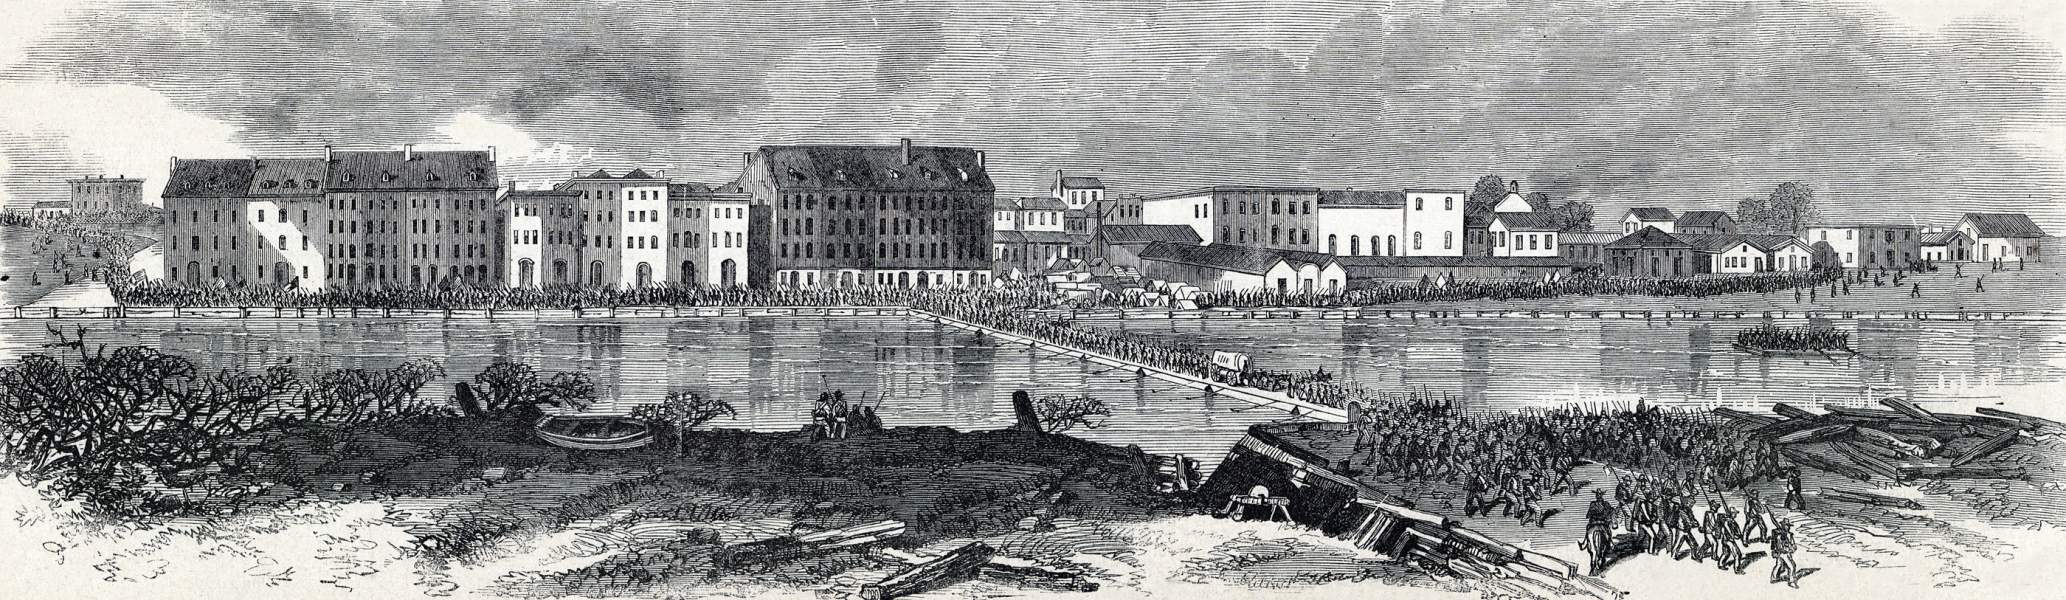 Confederate Evacuation of Savannah, Georgia, December 21, 1864, artist's impression, zoomable image